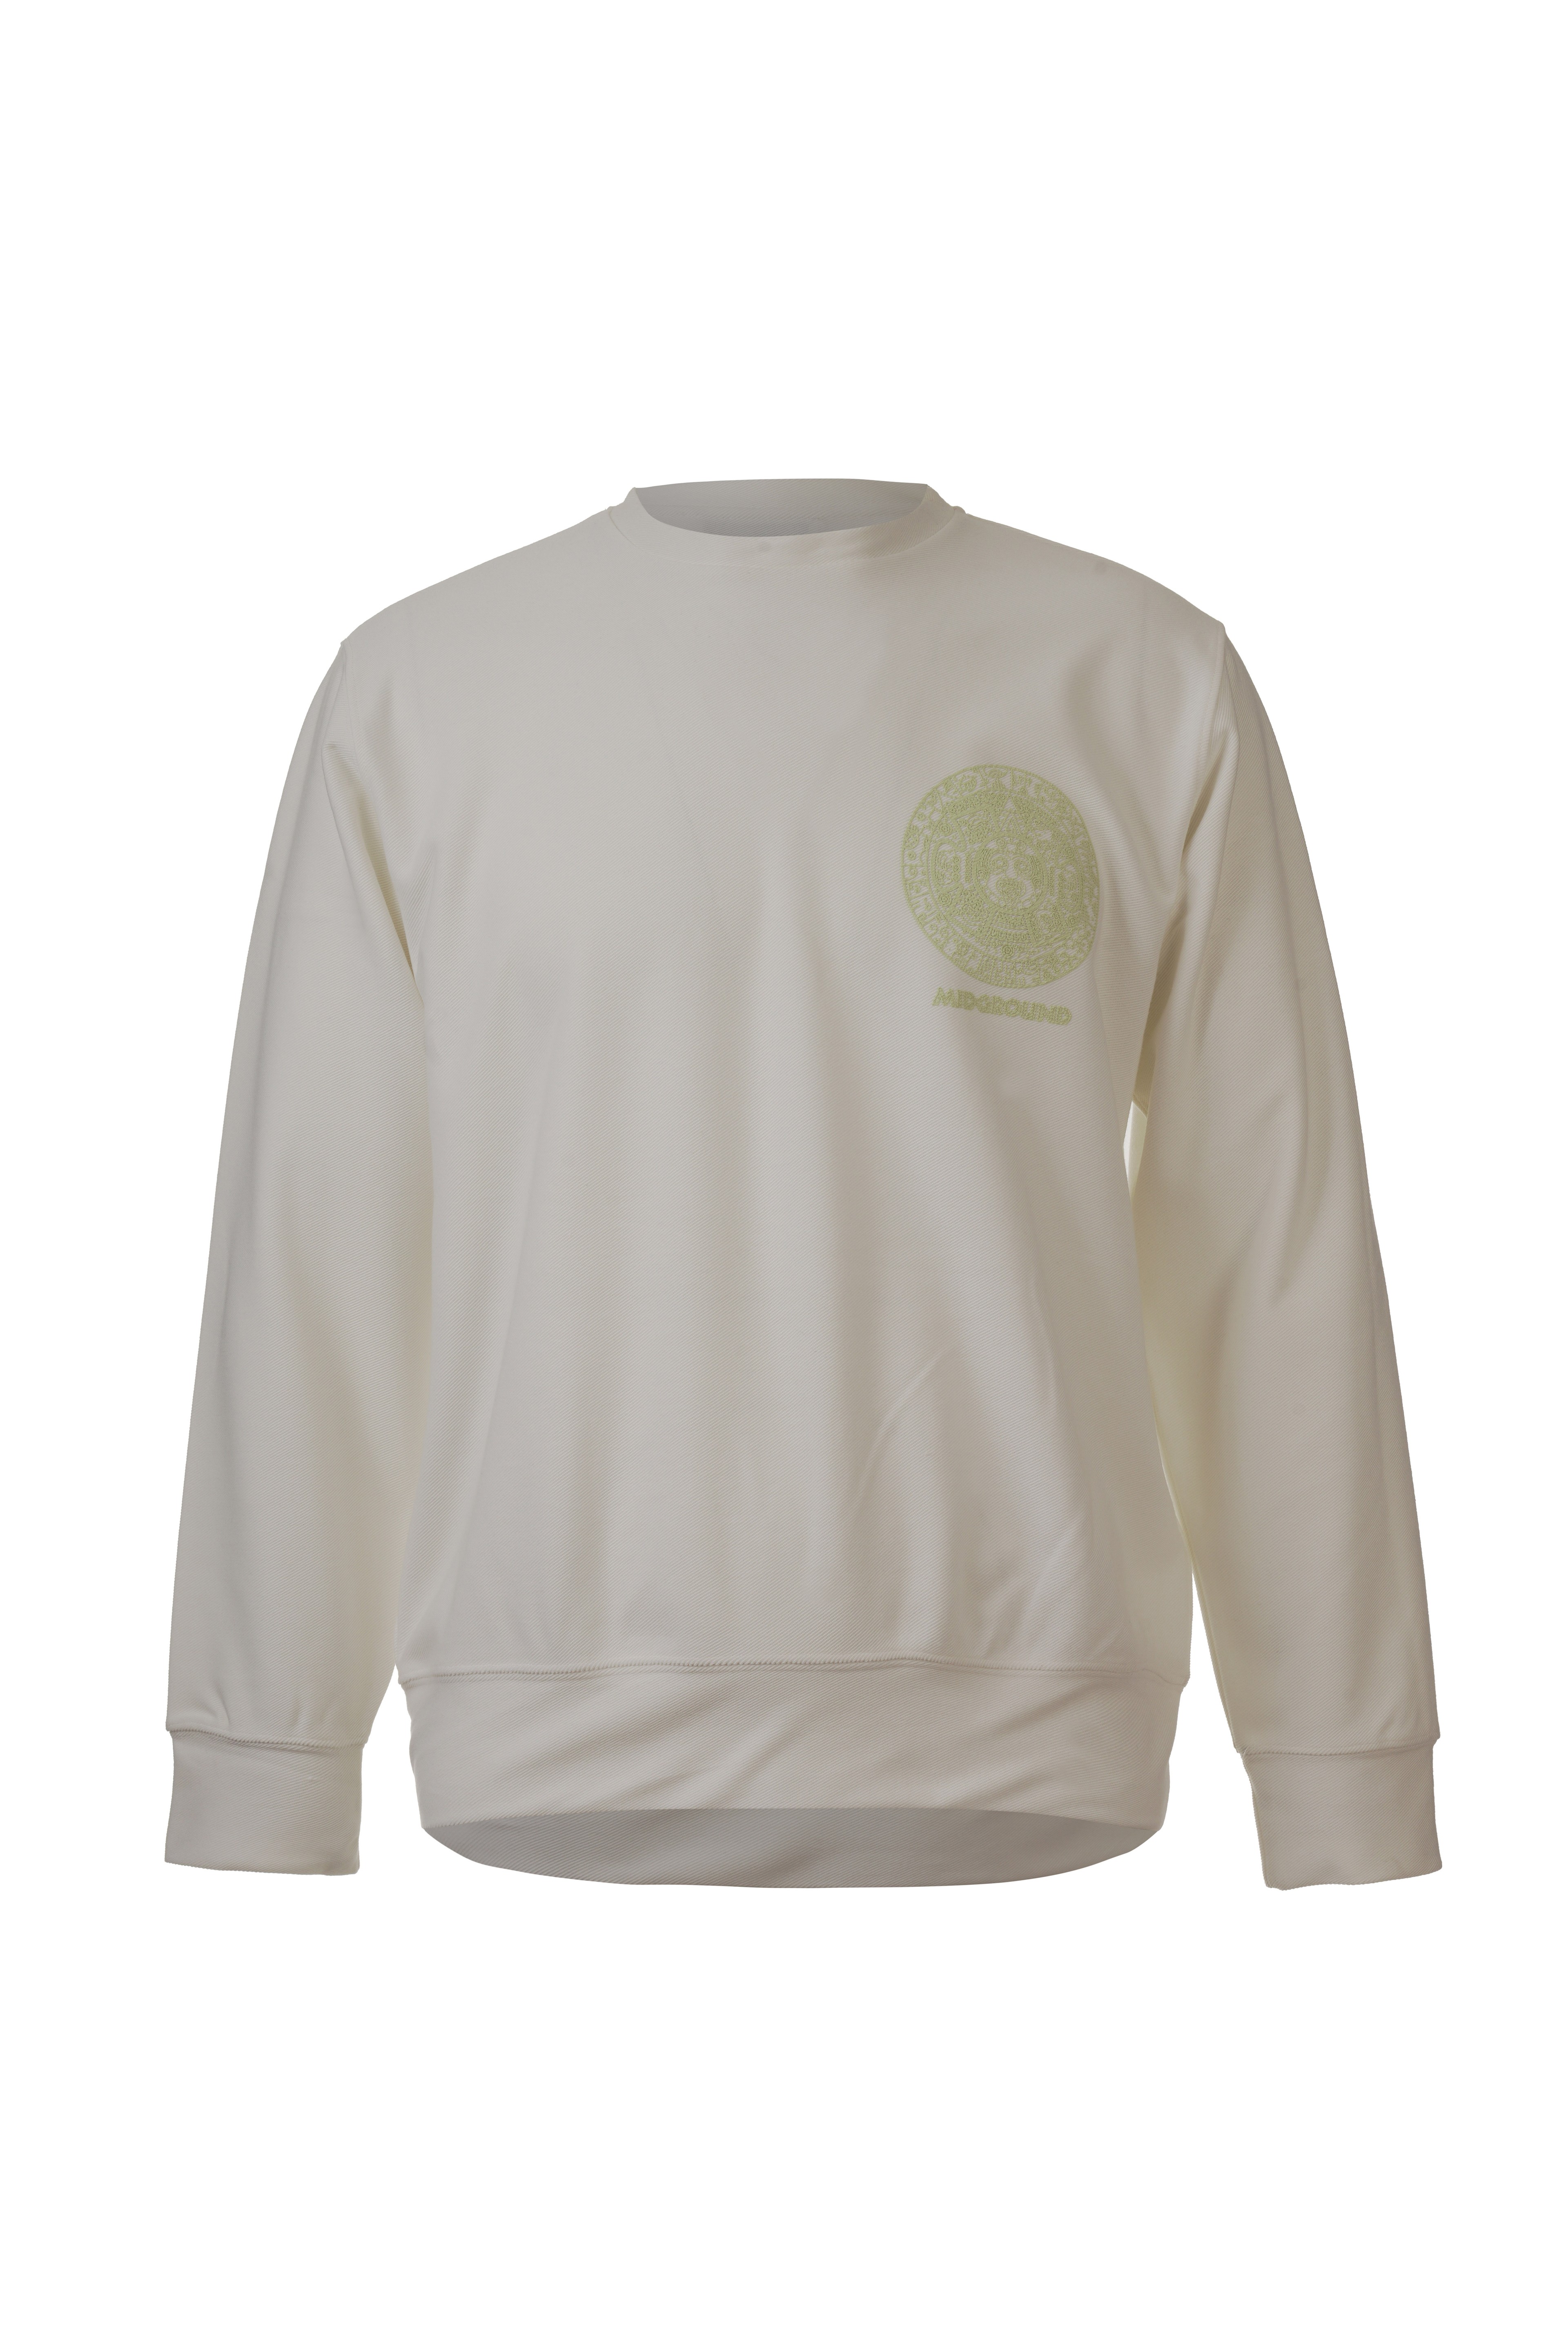 Drop #M077 Sweatshirt - White